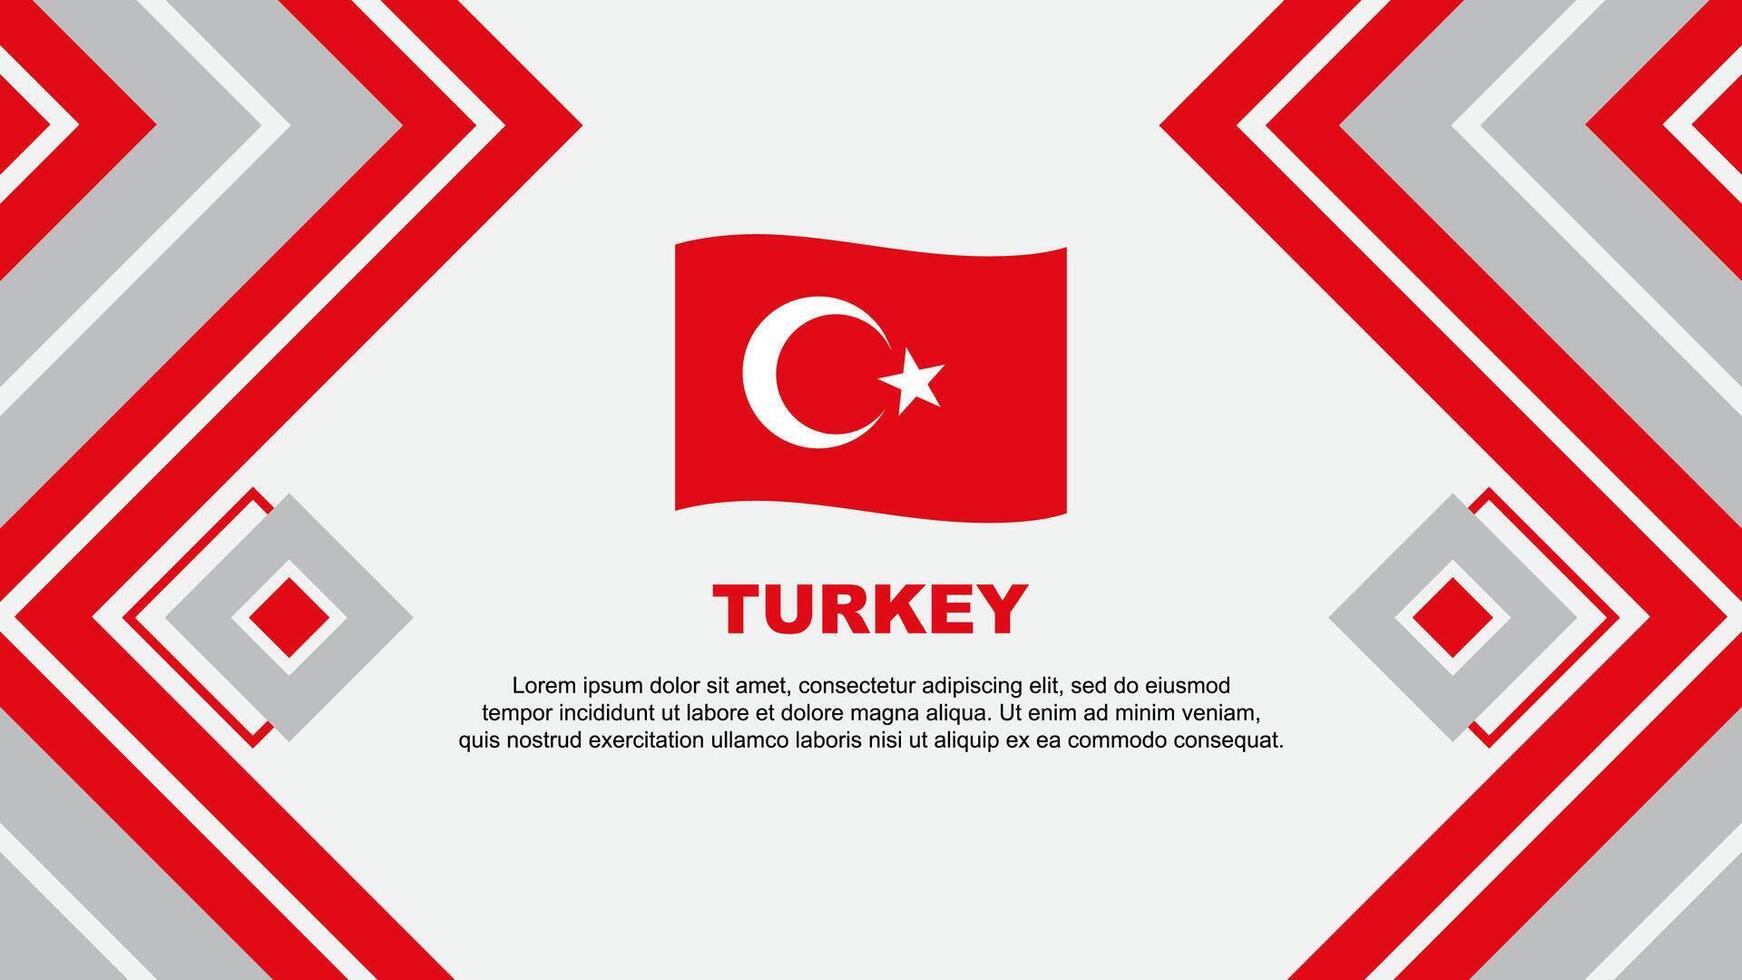 Turkey Flag Abstract Background Design Template. Turkey Independence Day Banner Wallpaper Vector Illustration. Turkey Design